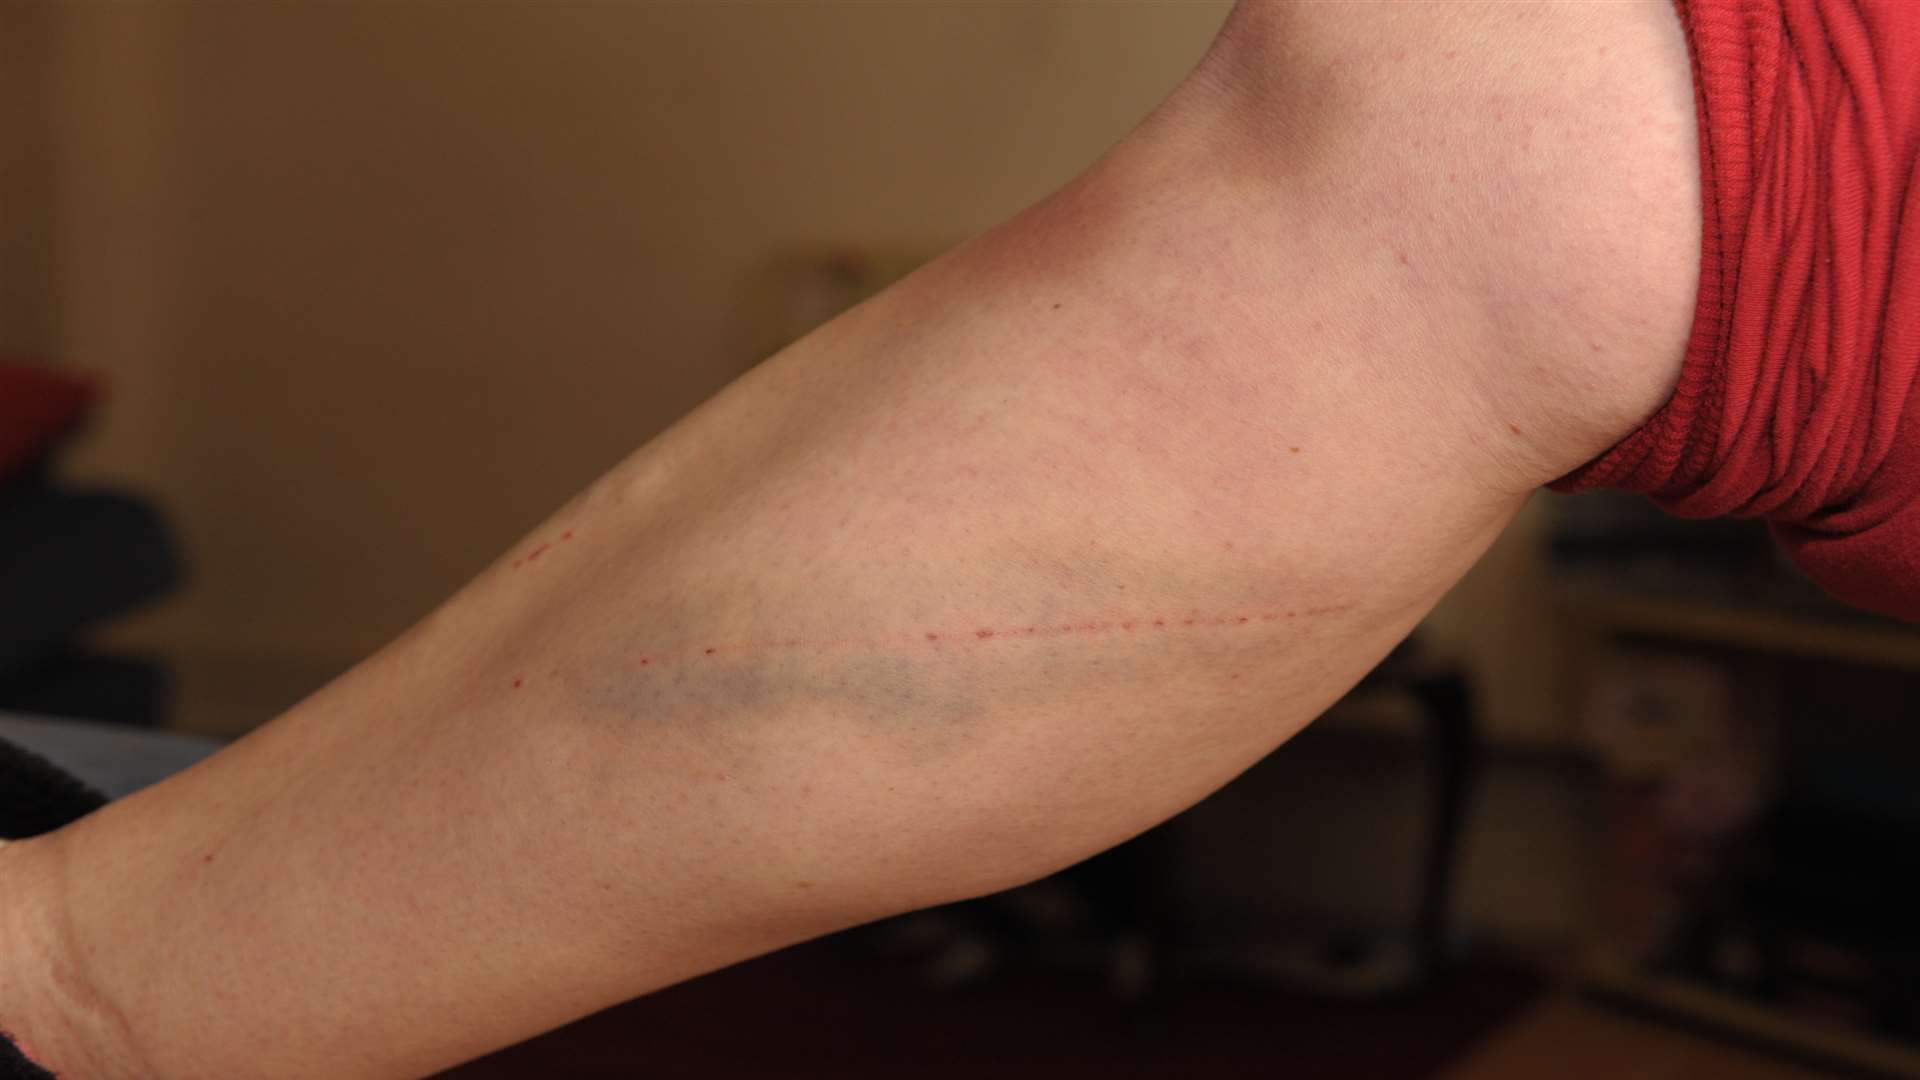 Vicky Swift's bruised leg